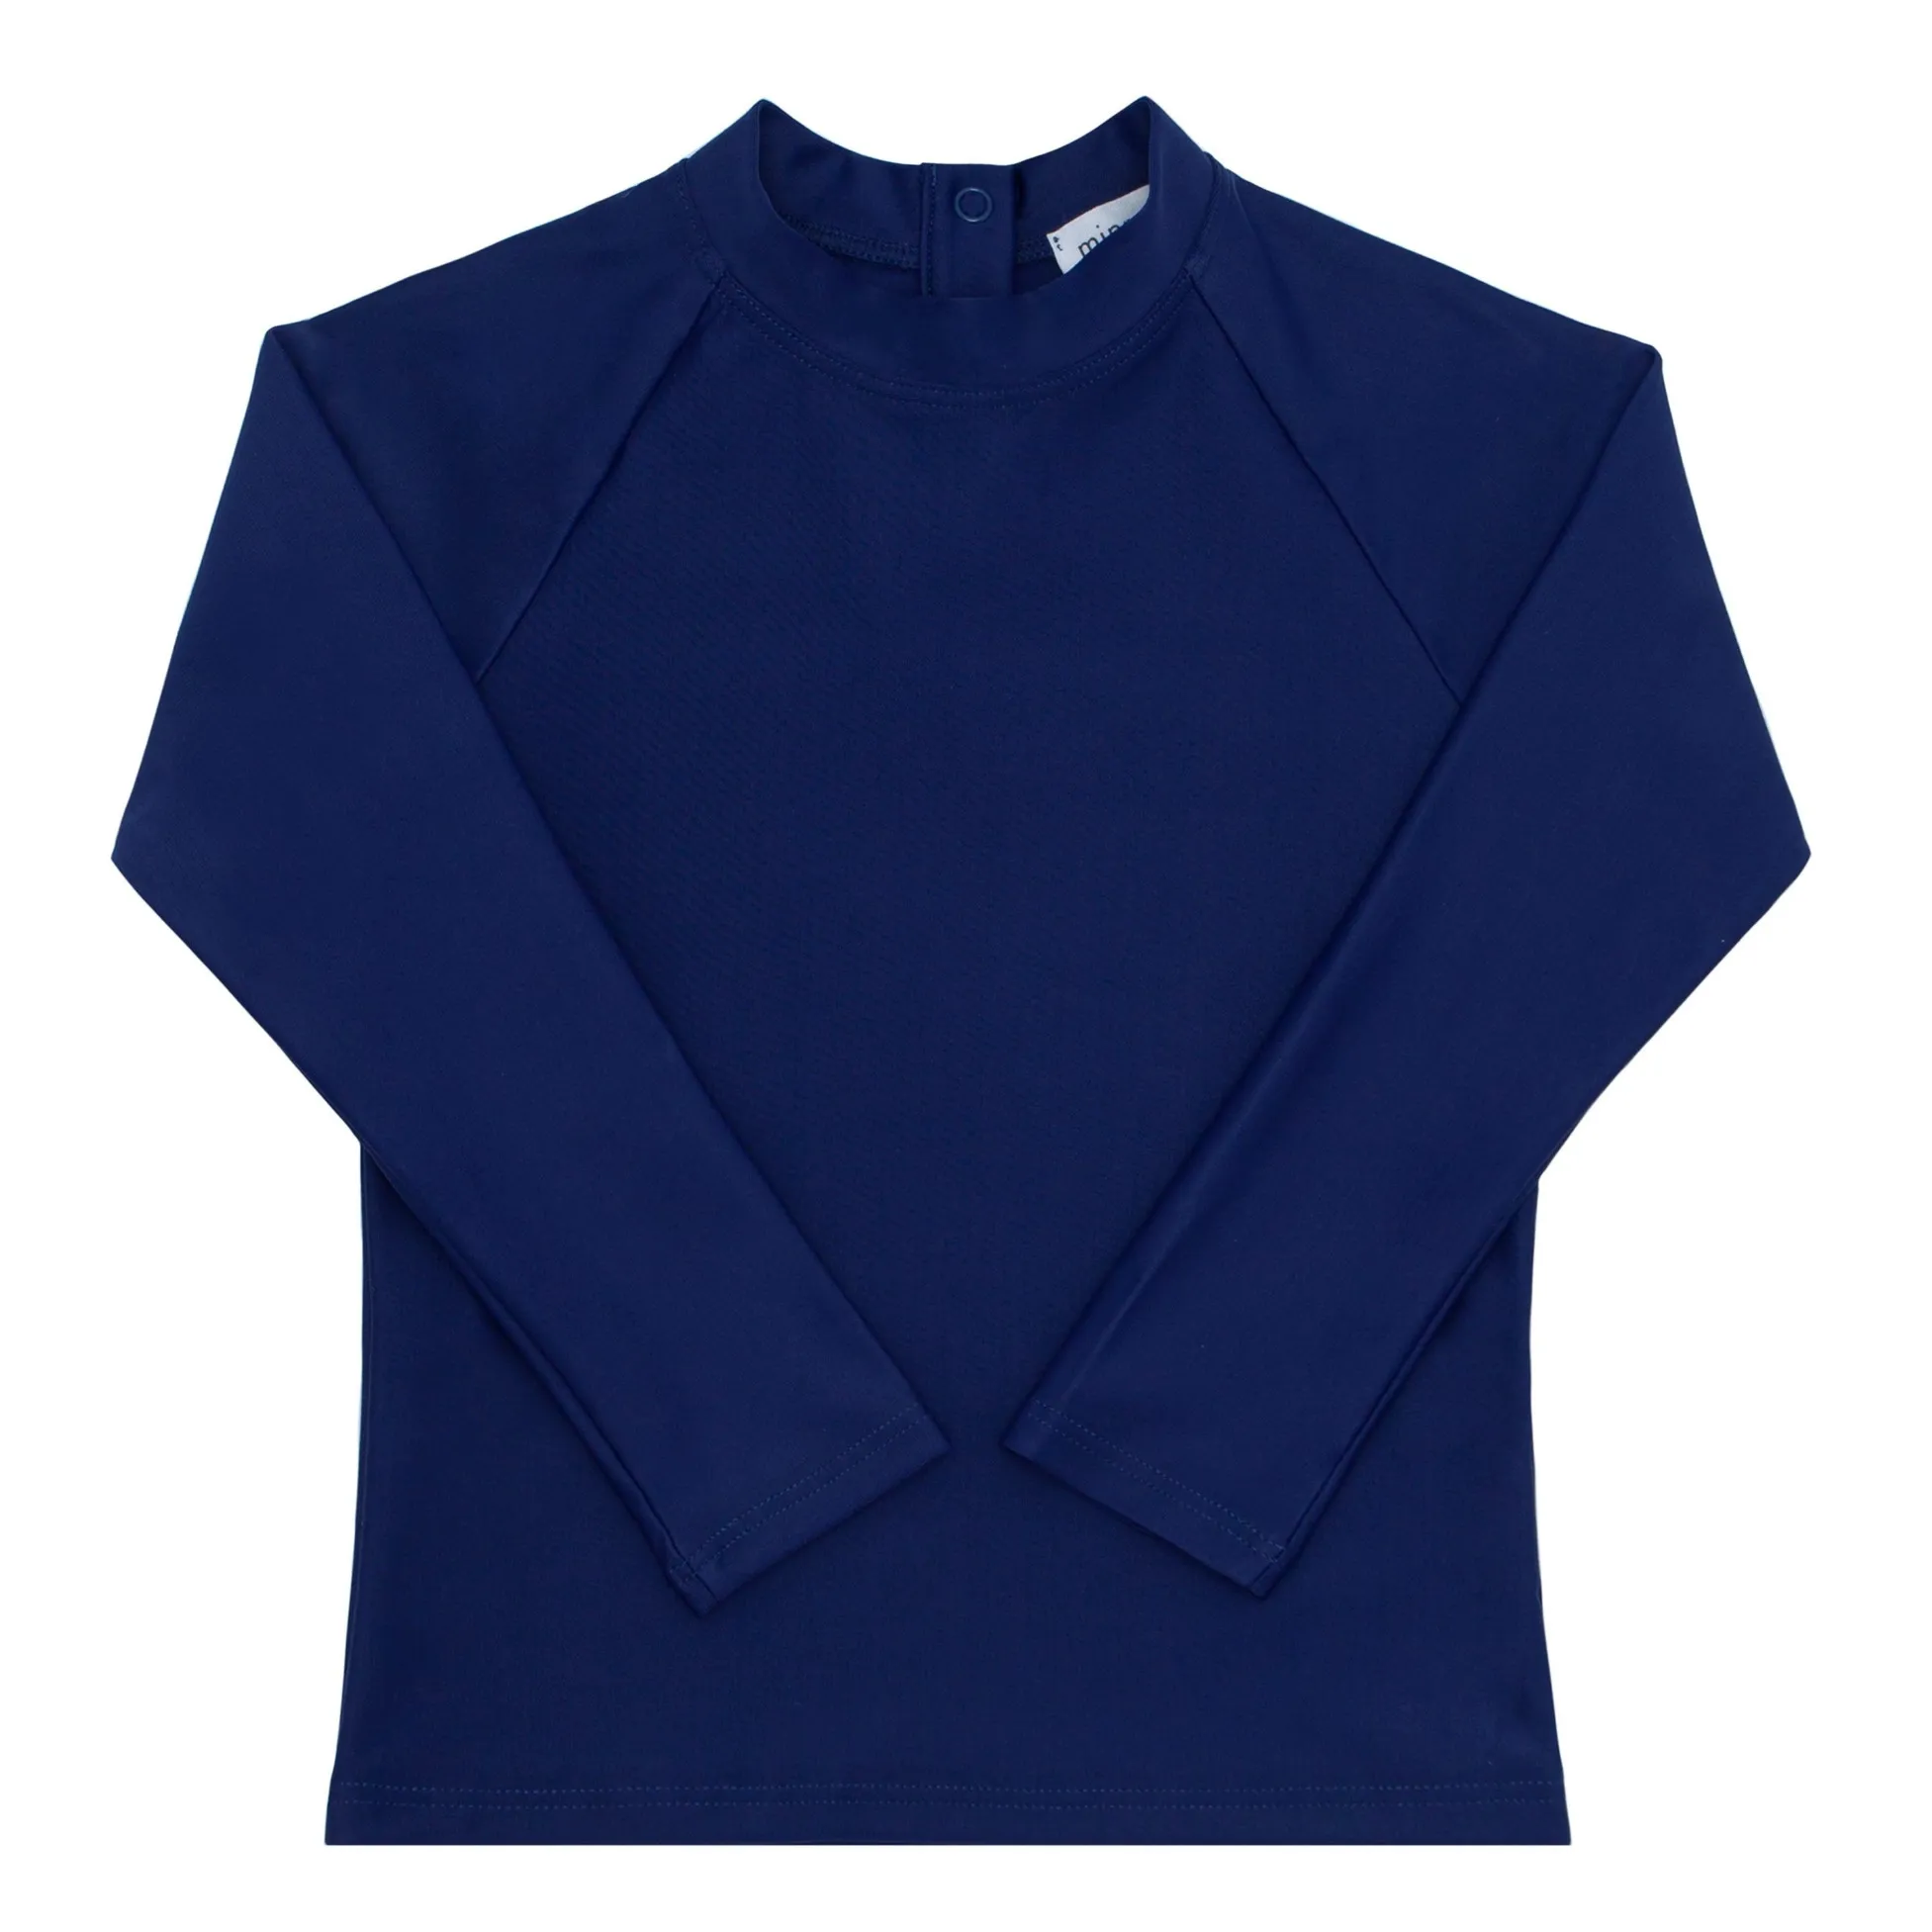 Minnow - T-shirt Anti-UV Uni - Bleu marine | Smallable